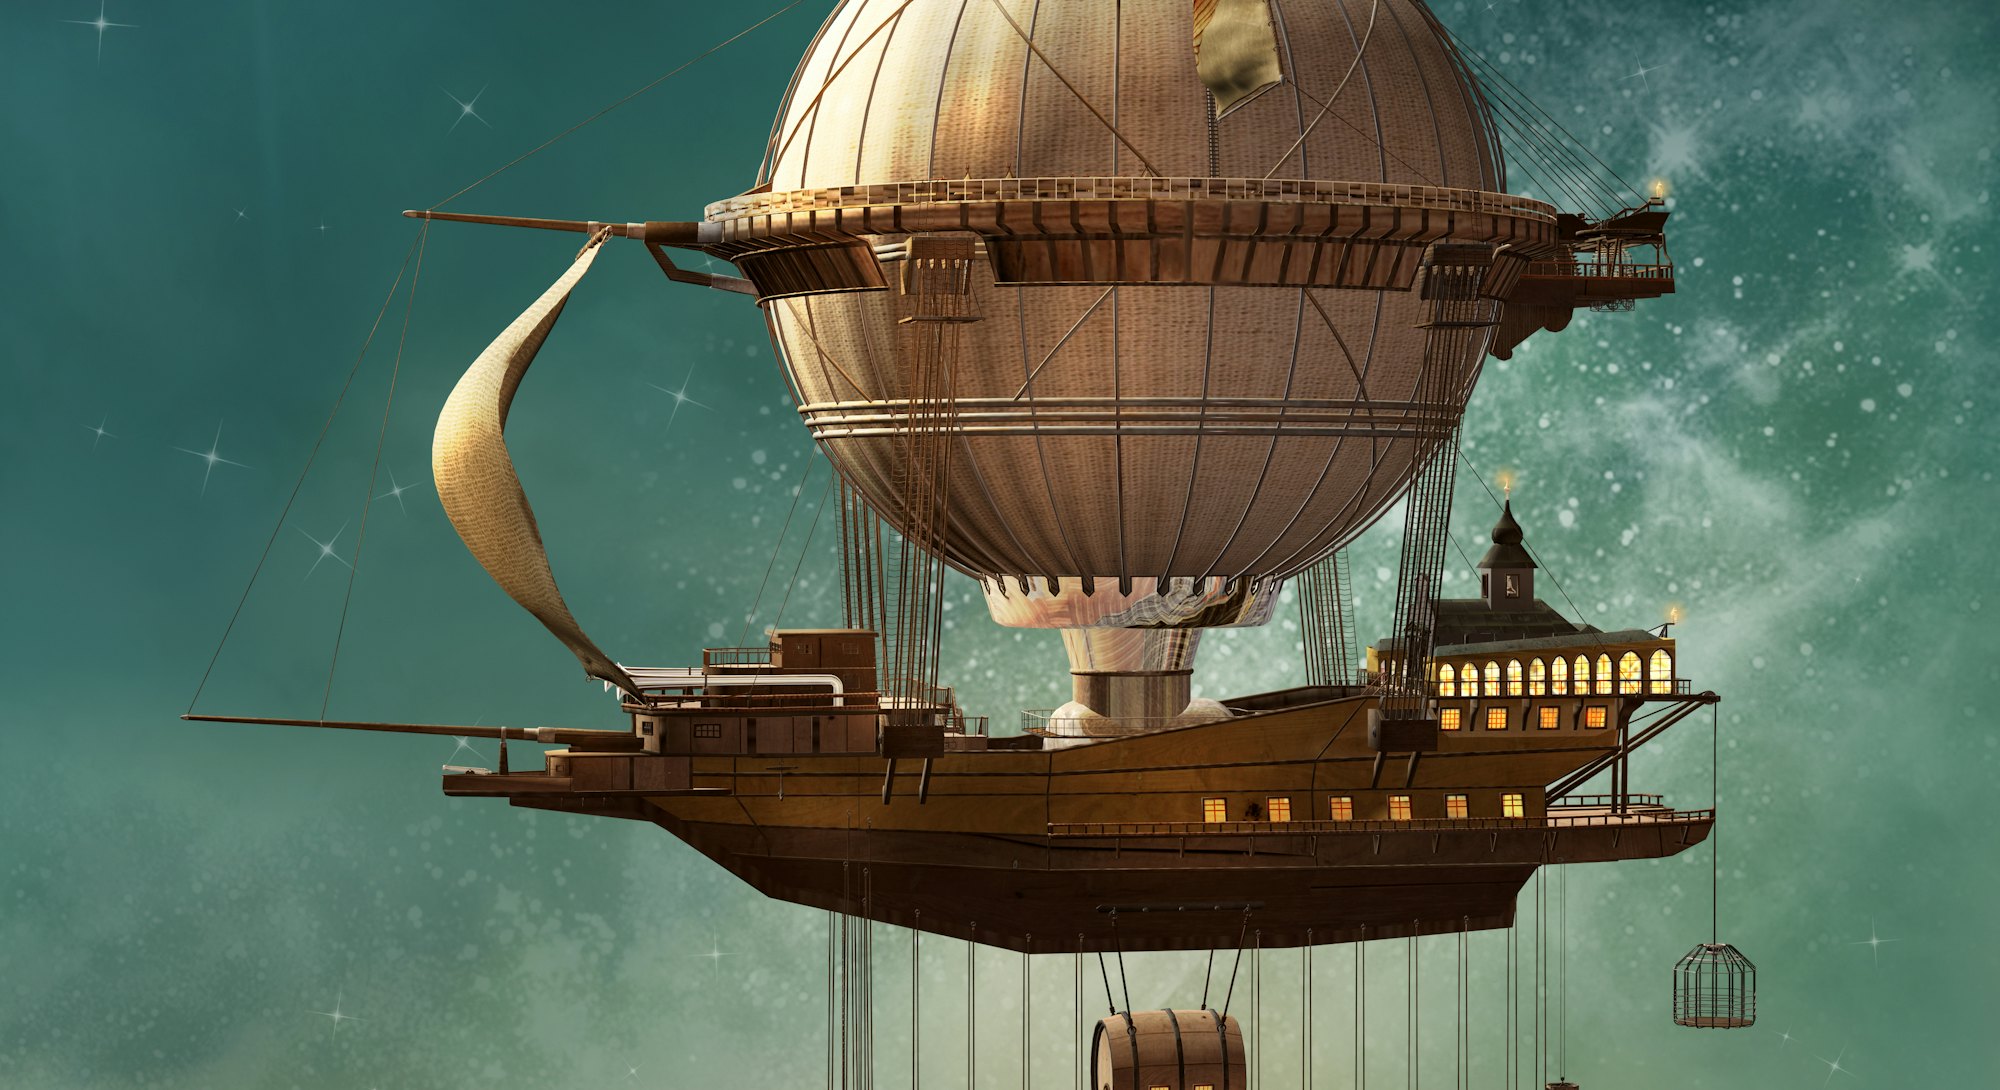 Steampunk hot air balloon - 3D illustration